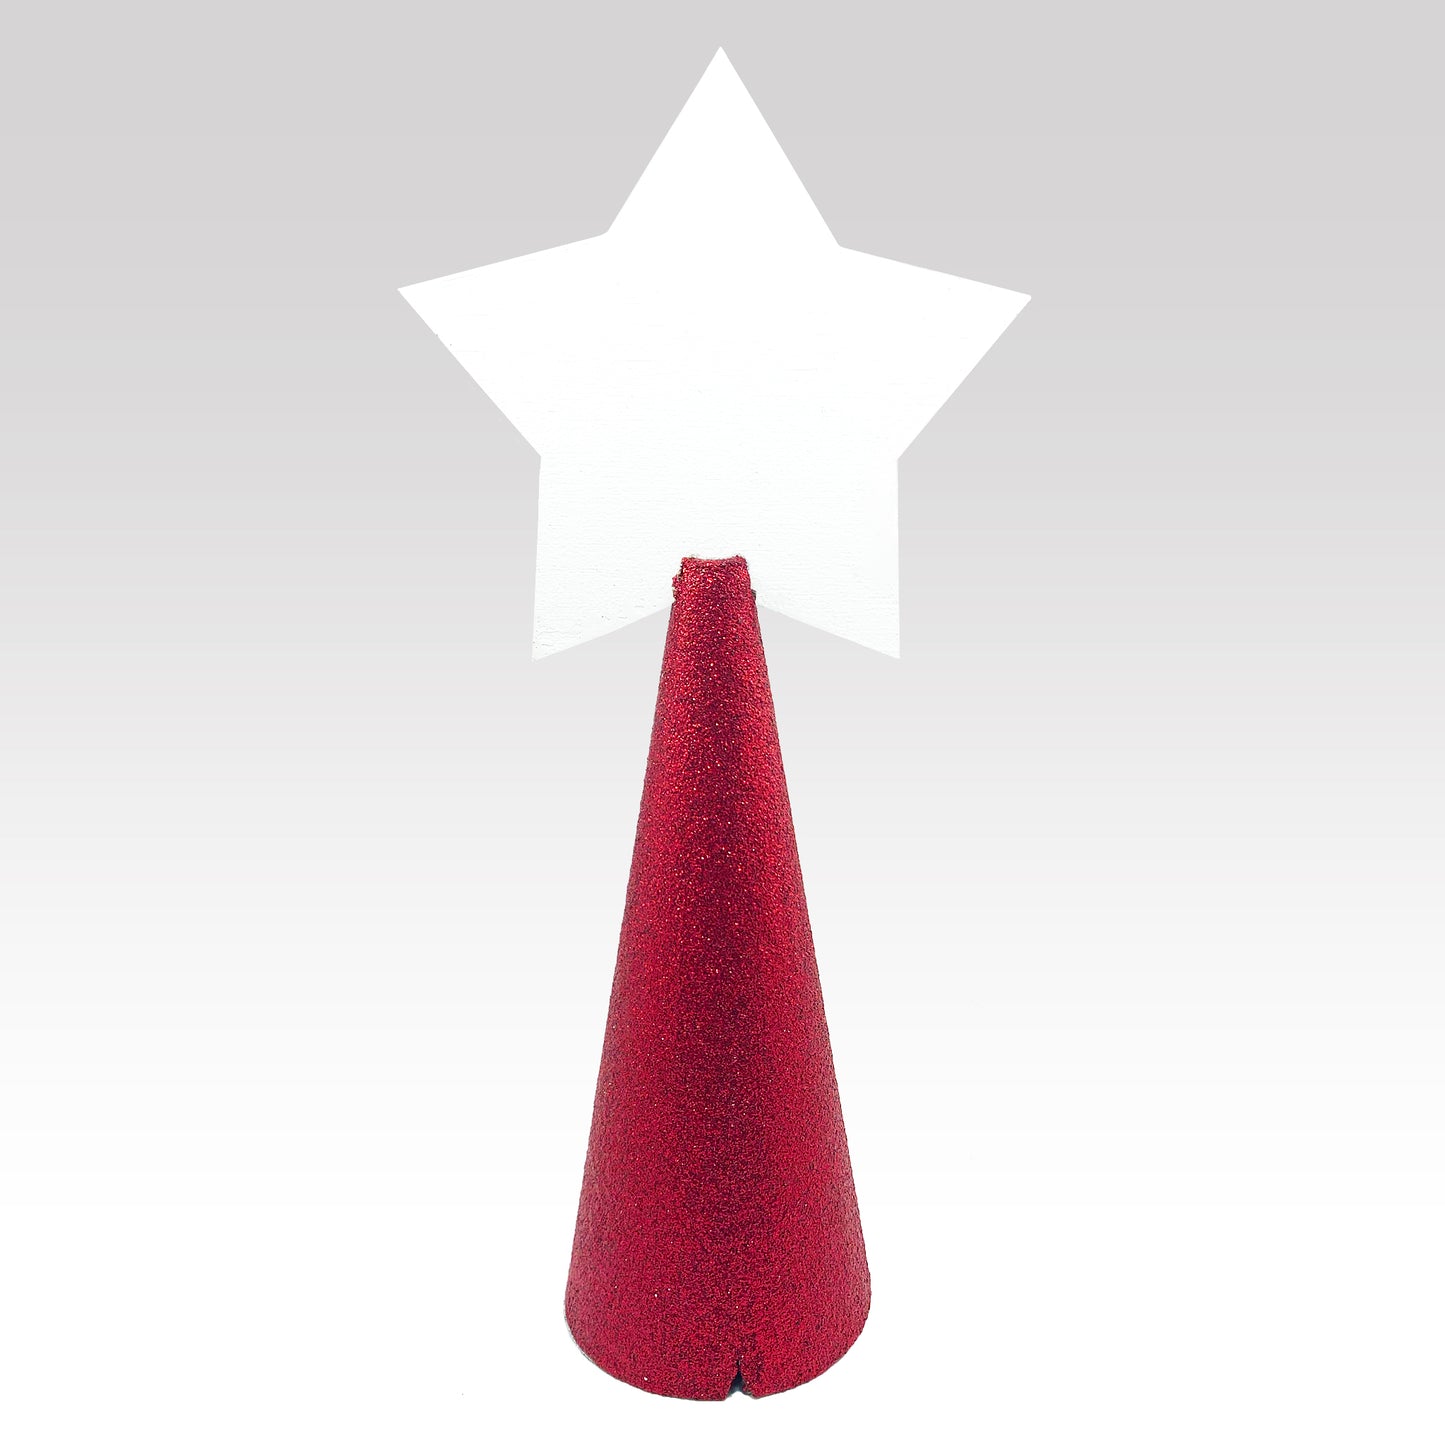 Custom tree topper - White Star - back - red glitter cone